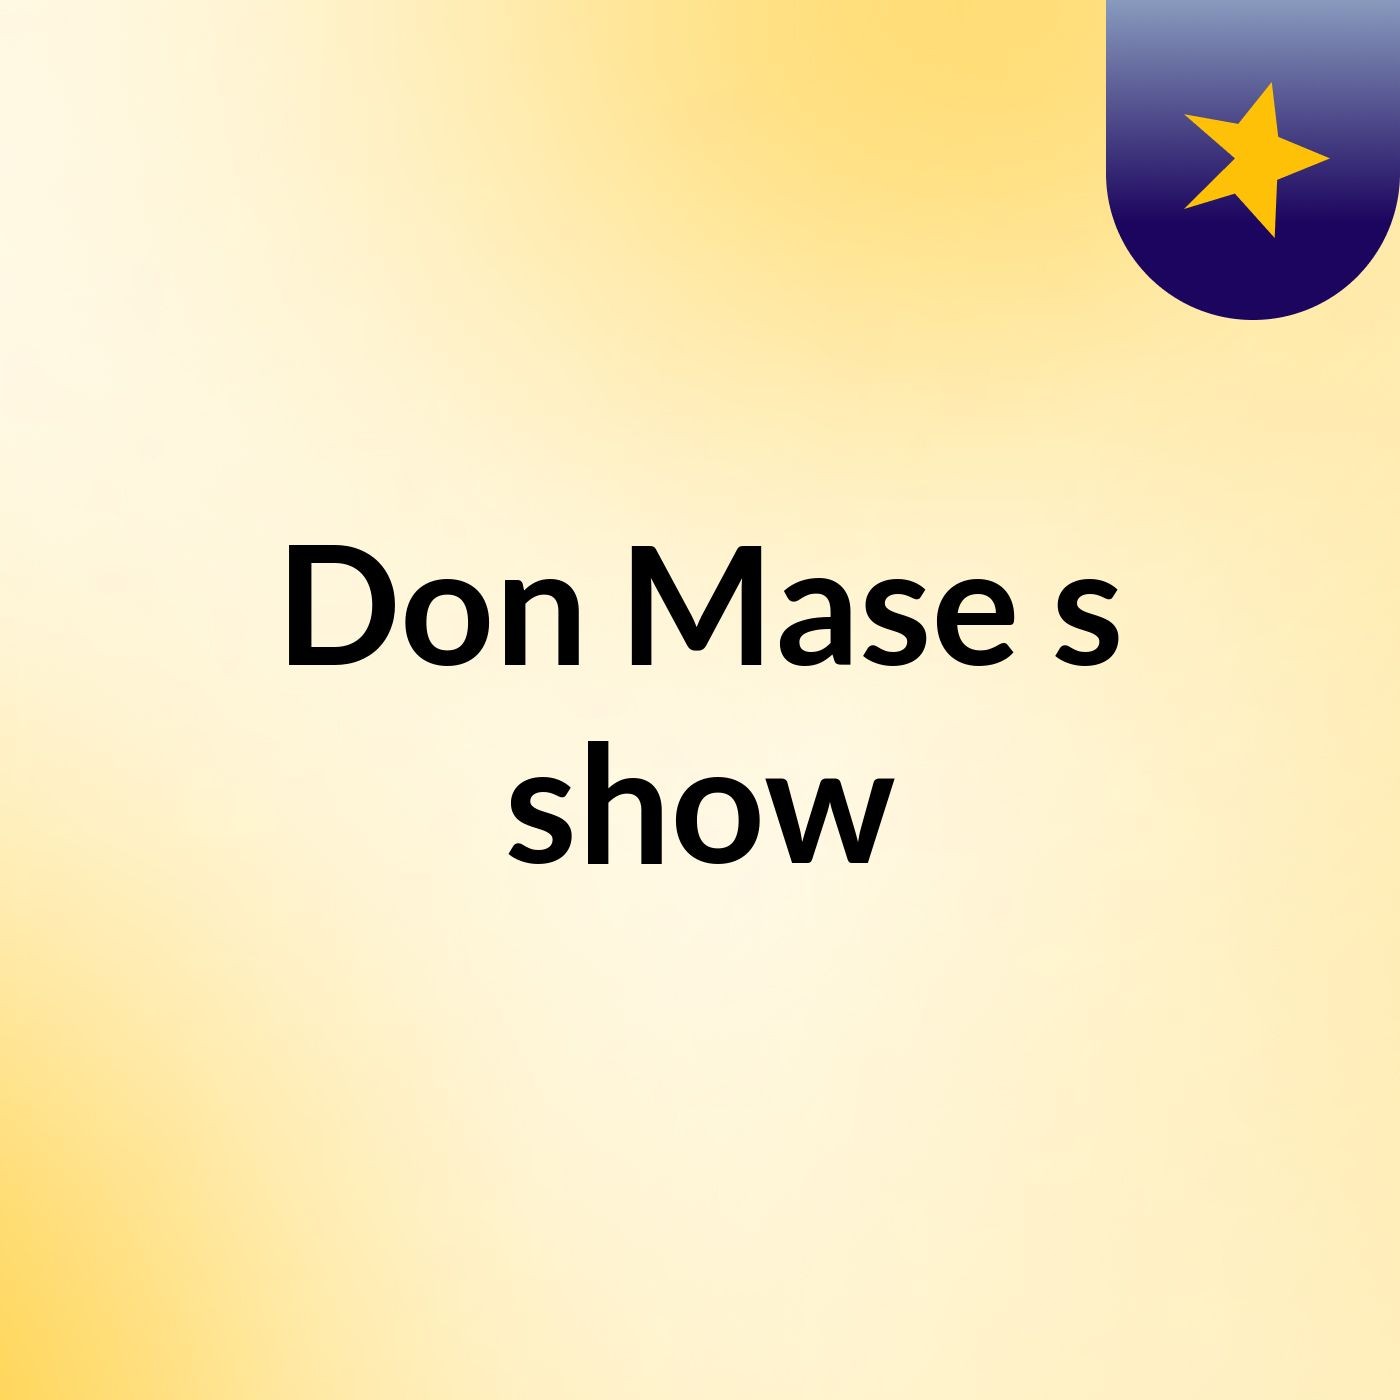 Don Mase's show